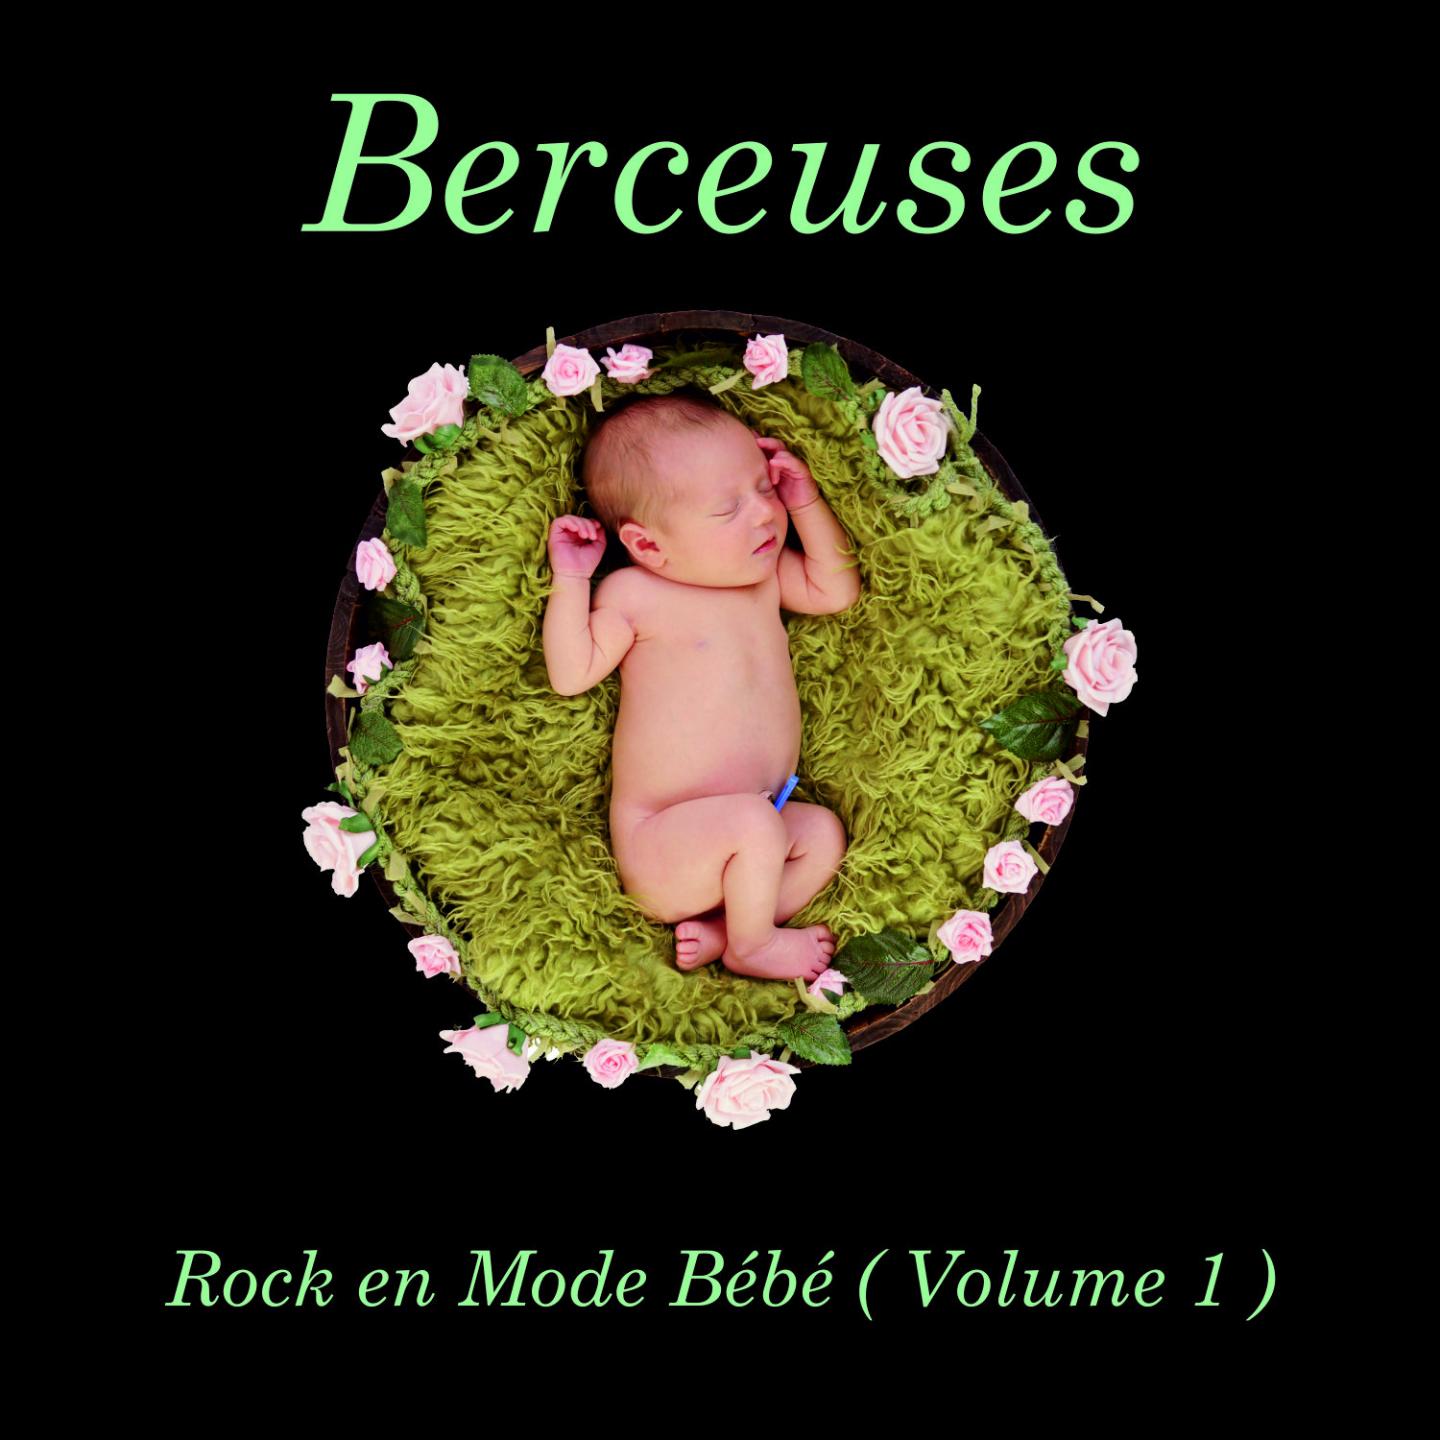 Berceuses: Rock en Mode Be be